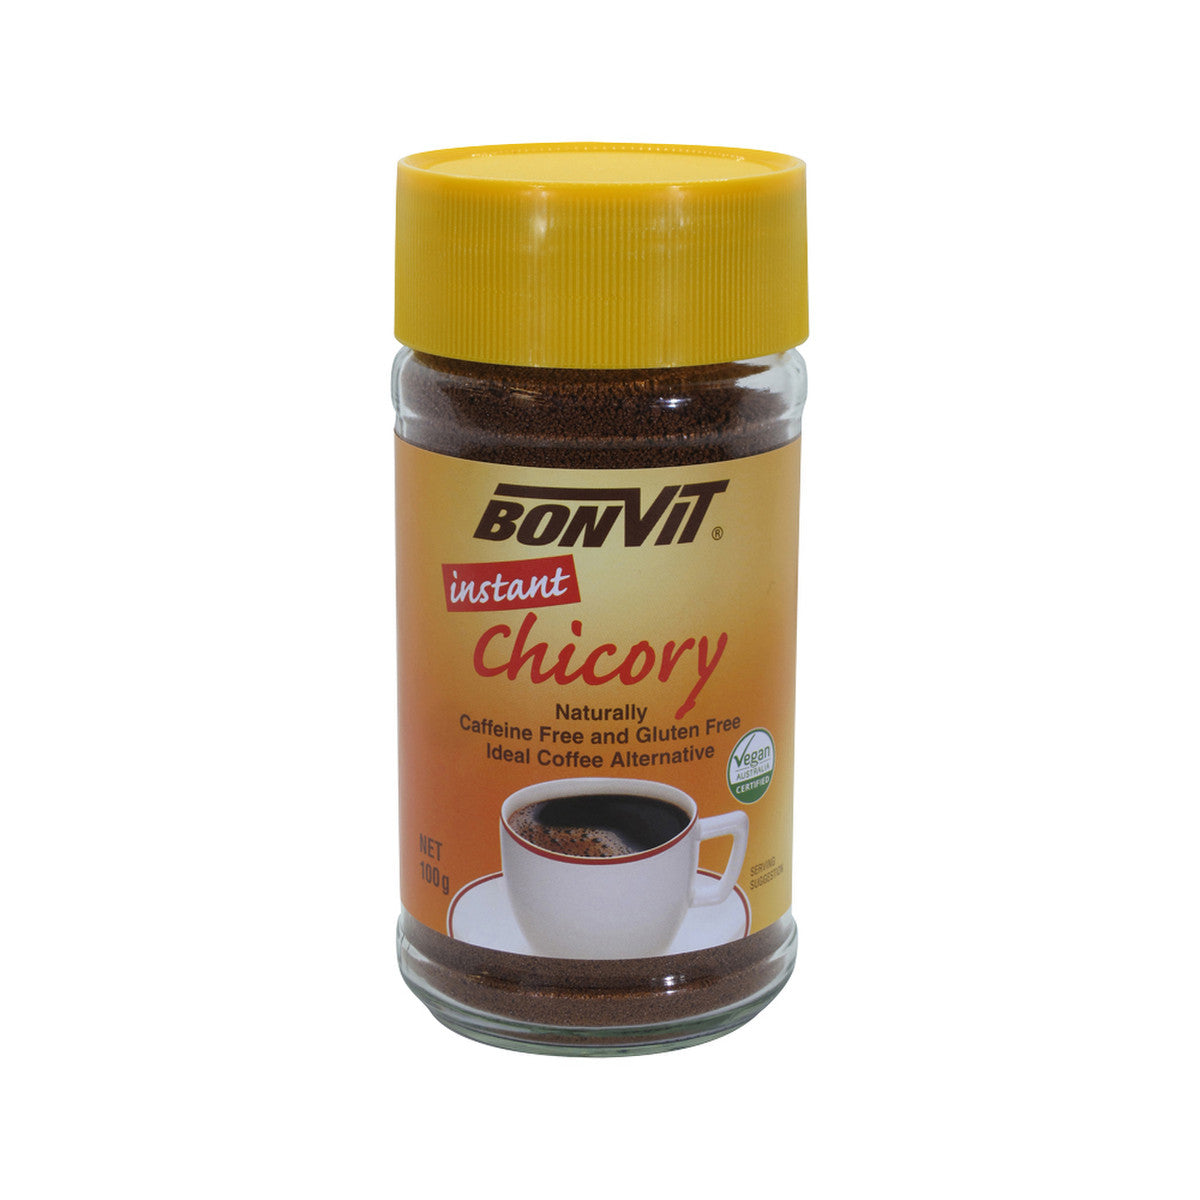 Bonvit Instant Chicory 100g, Caffeine Free